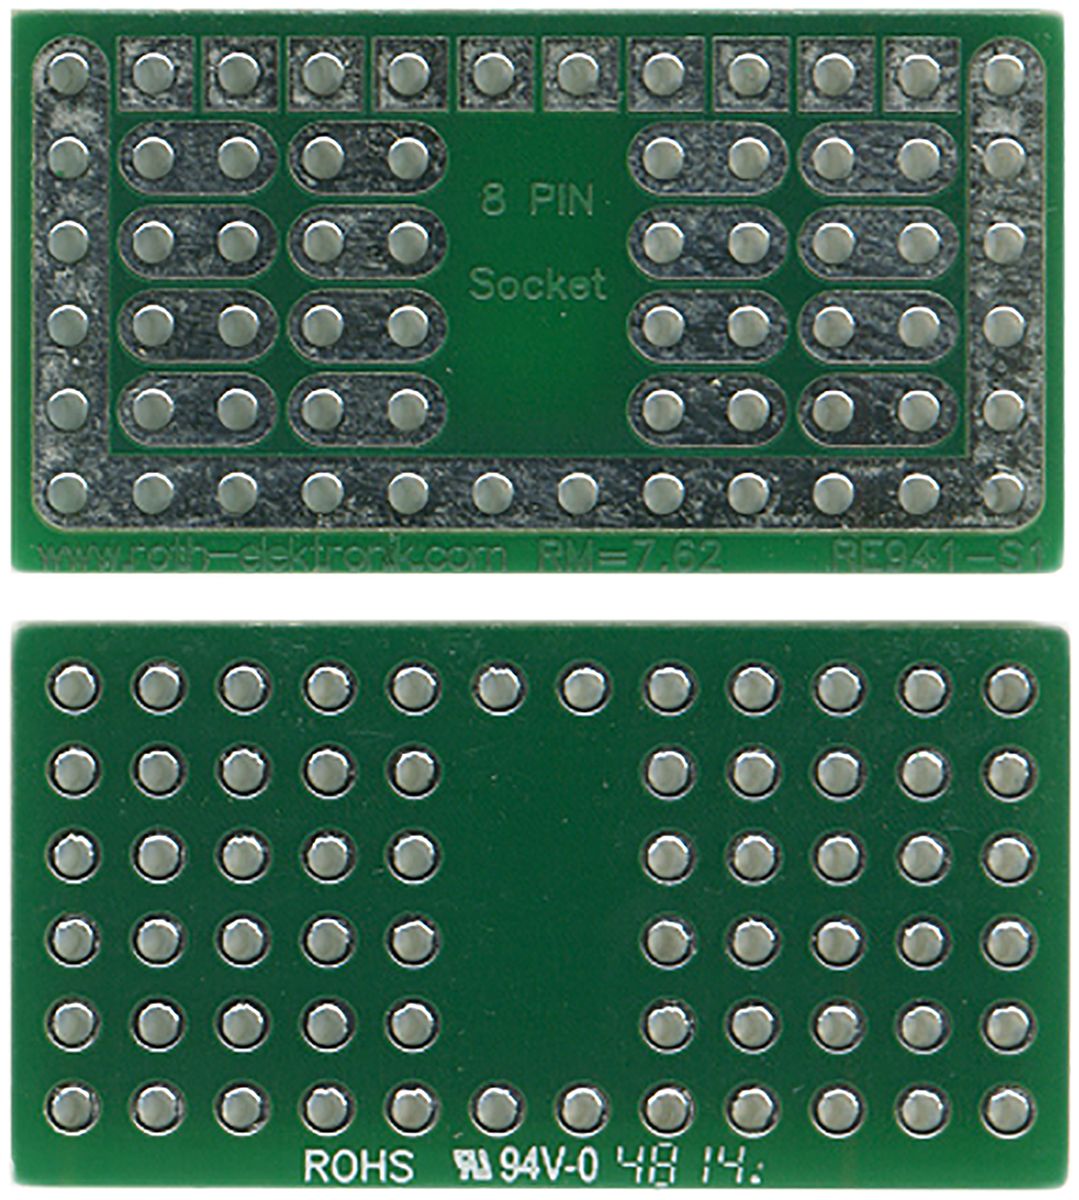 RE941-S1, Breadboard Solderable Breadboard With Adaption Circuit Board 31.75 x 17.14 x 1.5mm